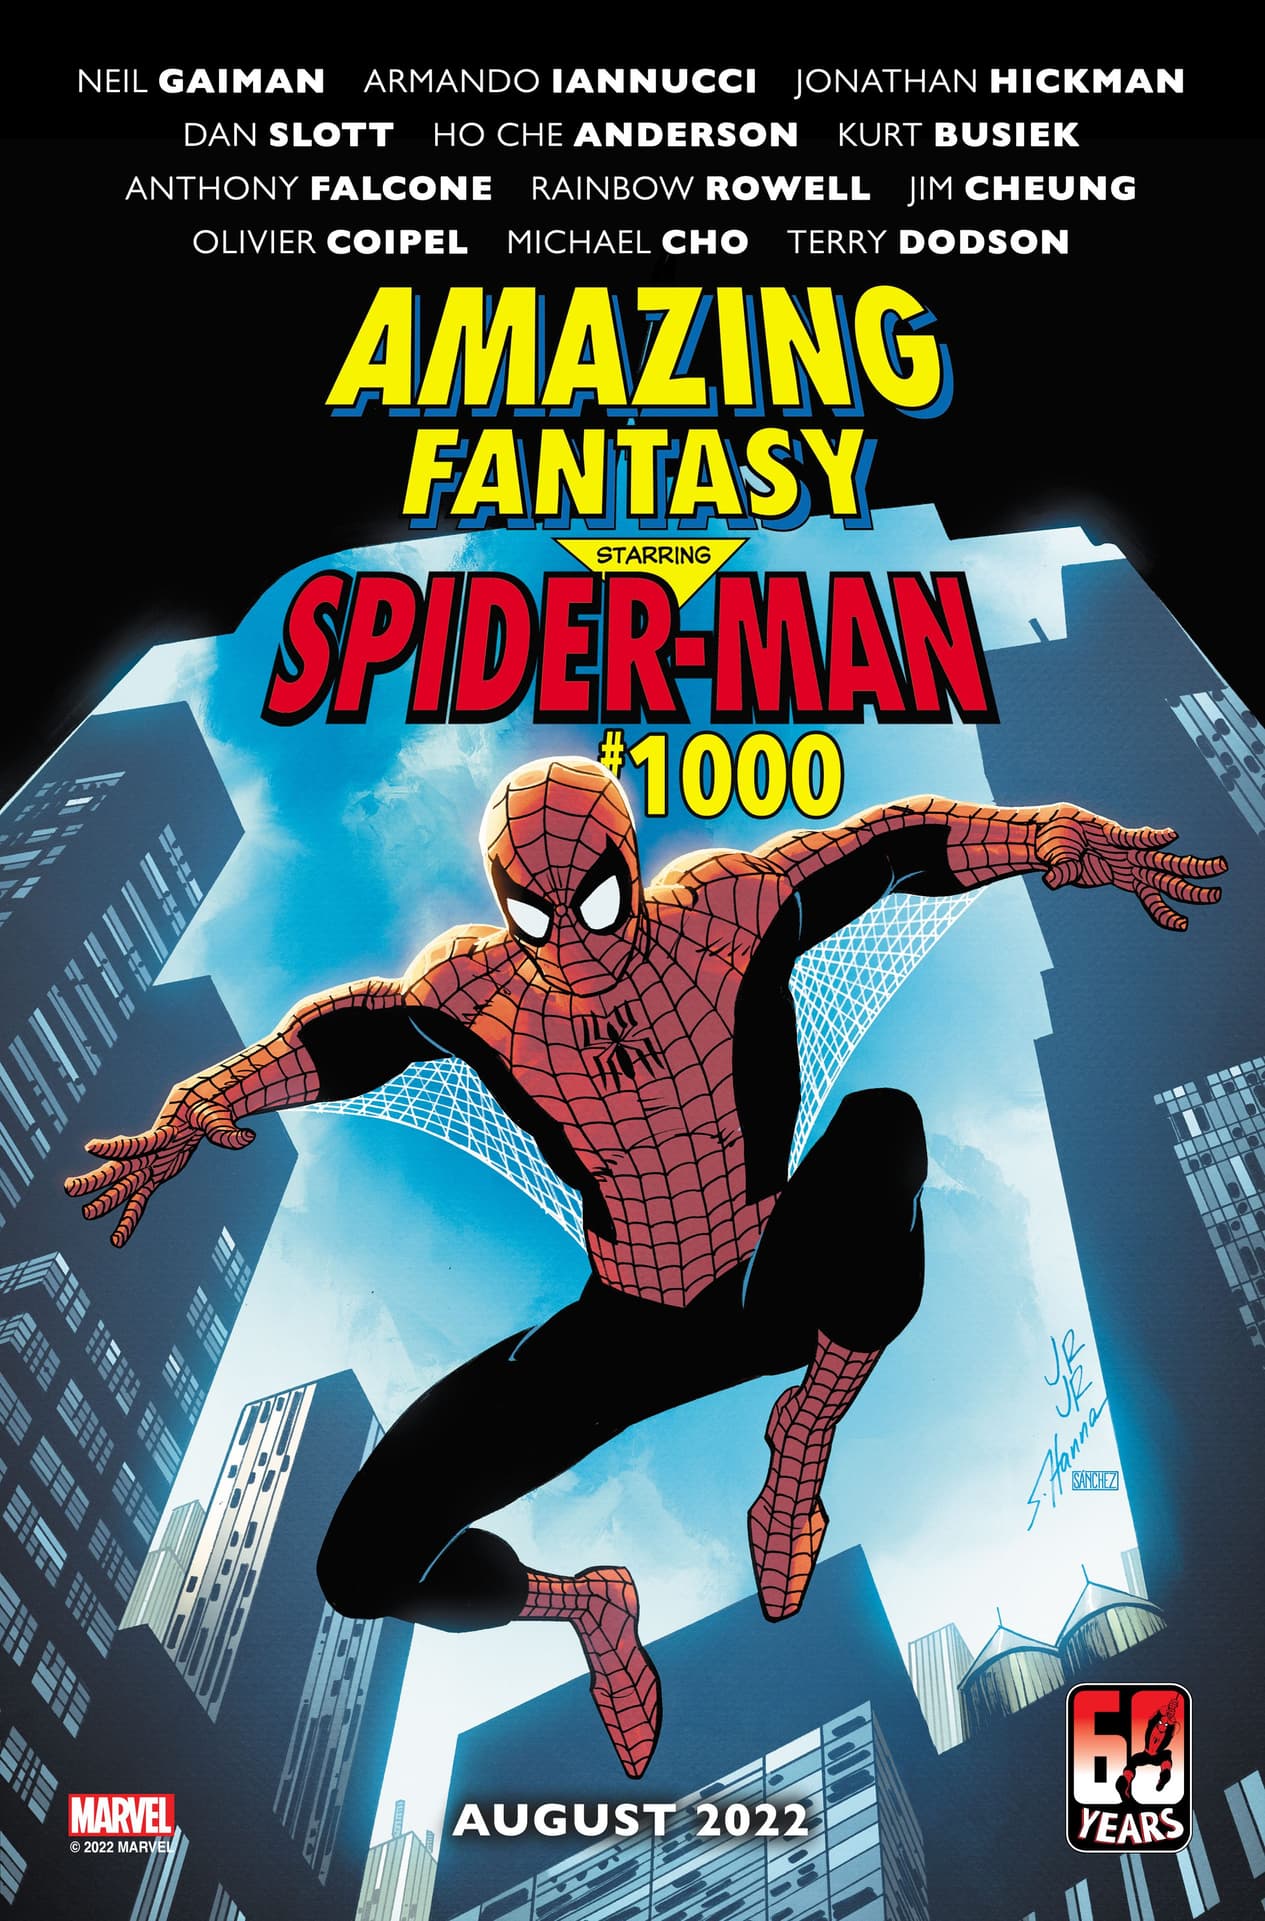 AMAZING FANTASY #1000 cover by John Romita Jr.